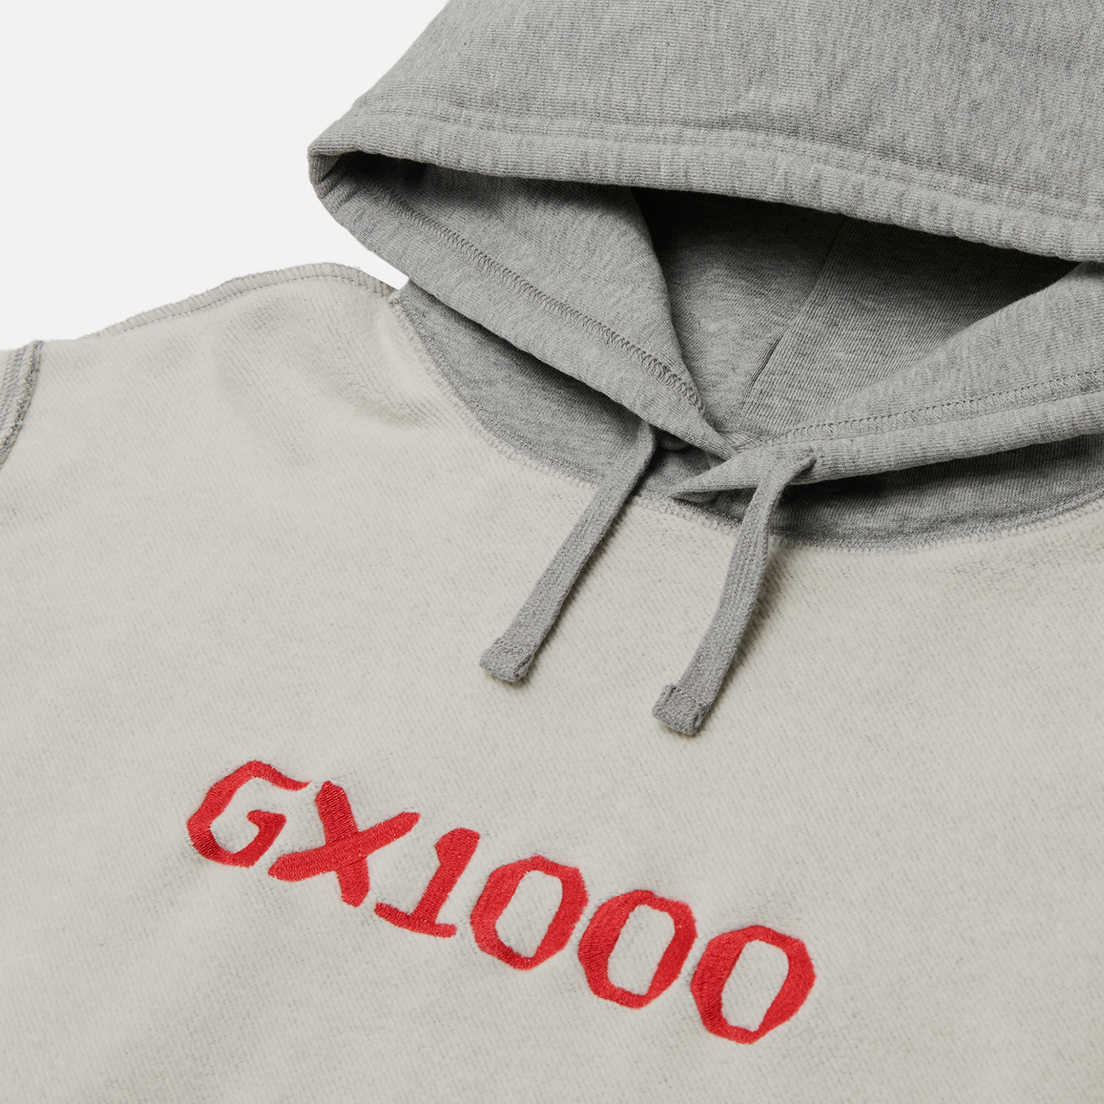 GX1000 Мужская толстовка OG Logo Inside Out Hoodie